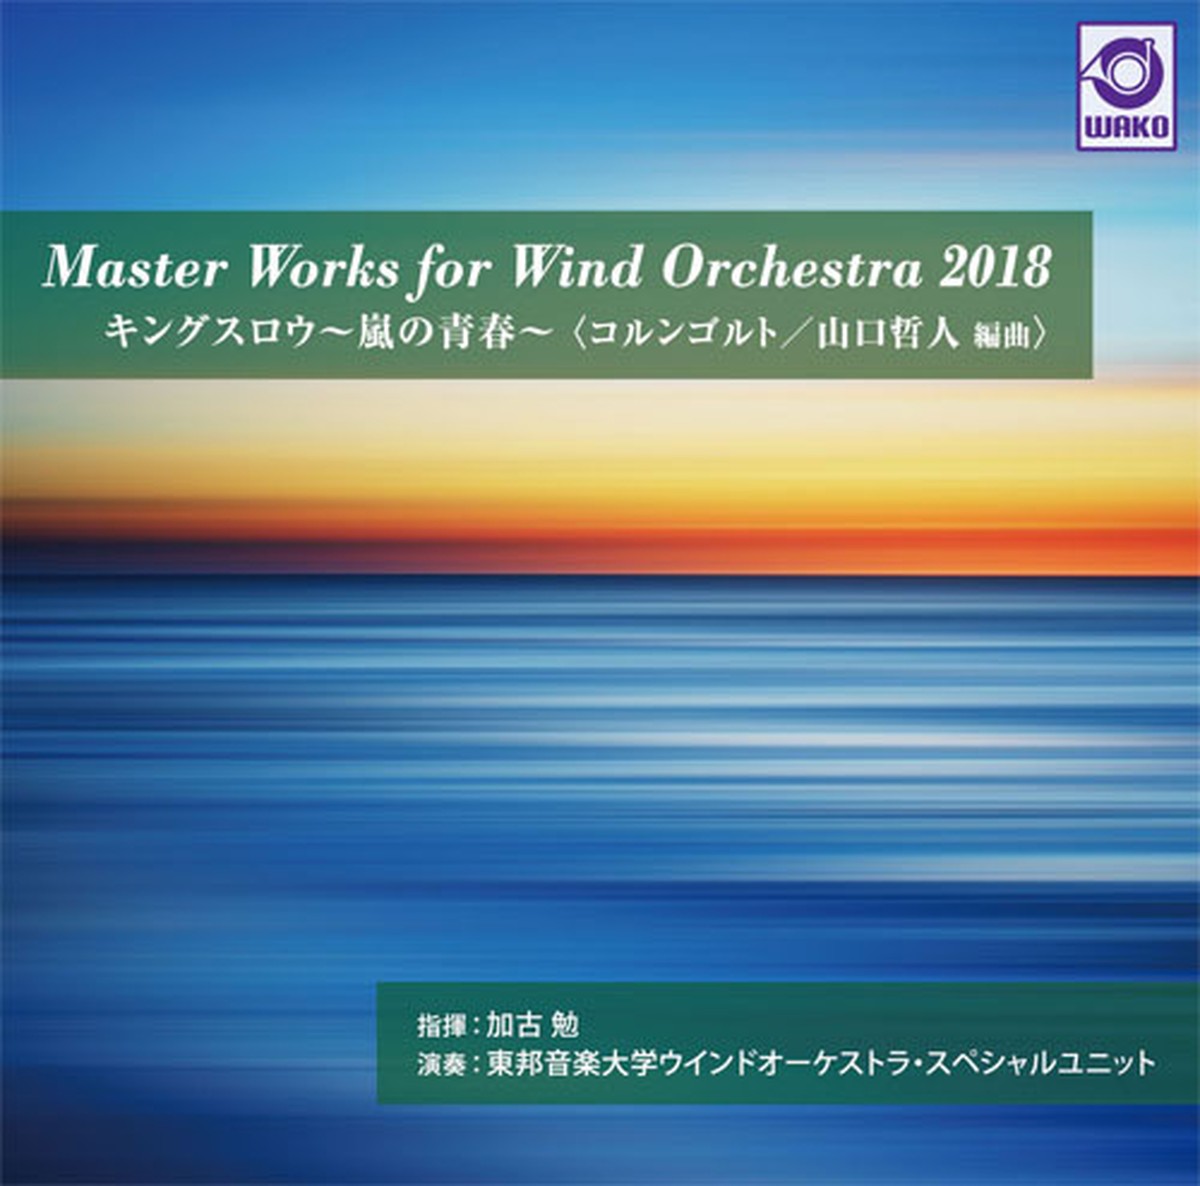 Master Works For Wind Orchestra 18 キングスロウ 嵐の青春 Wkcd 0101 Wako Records Inc